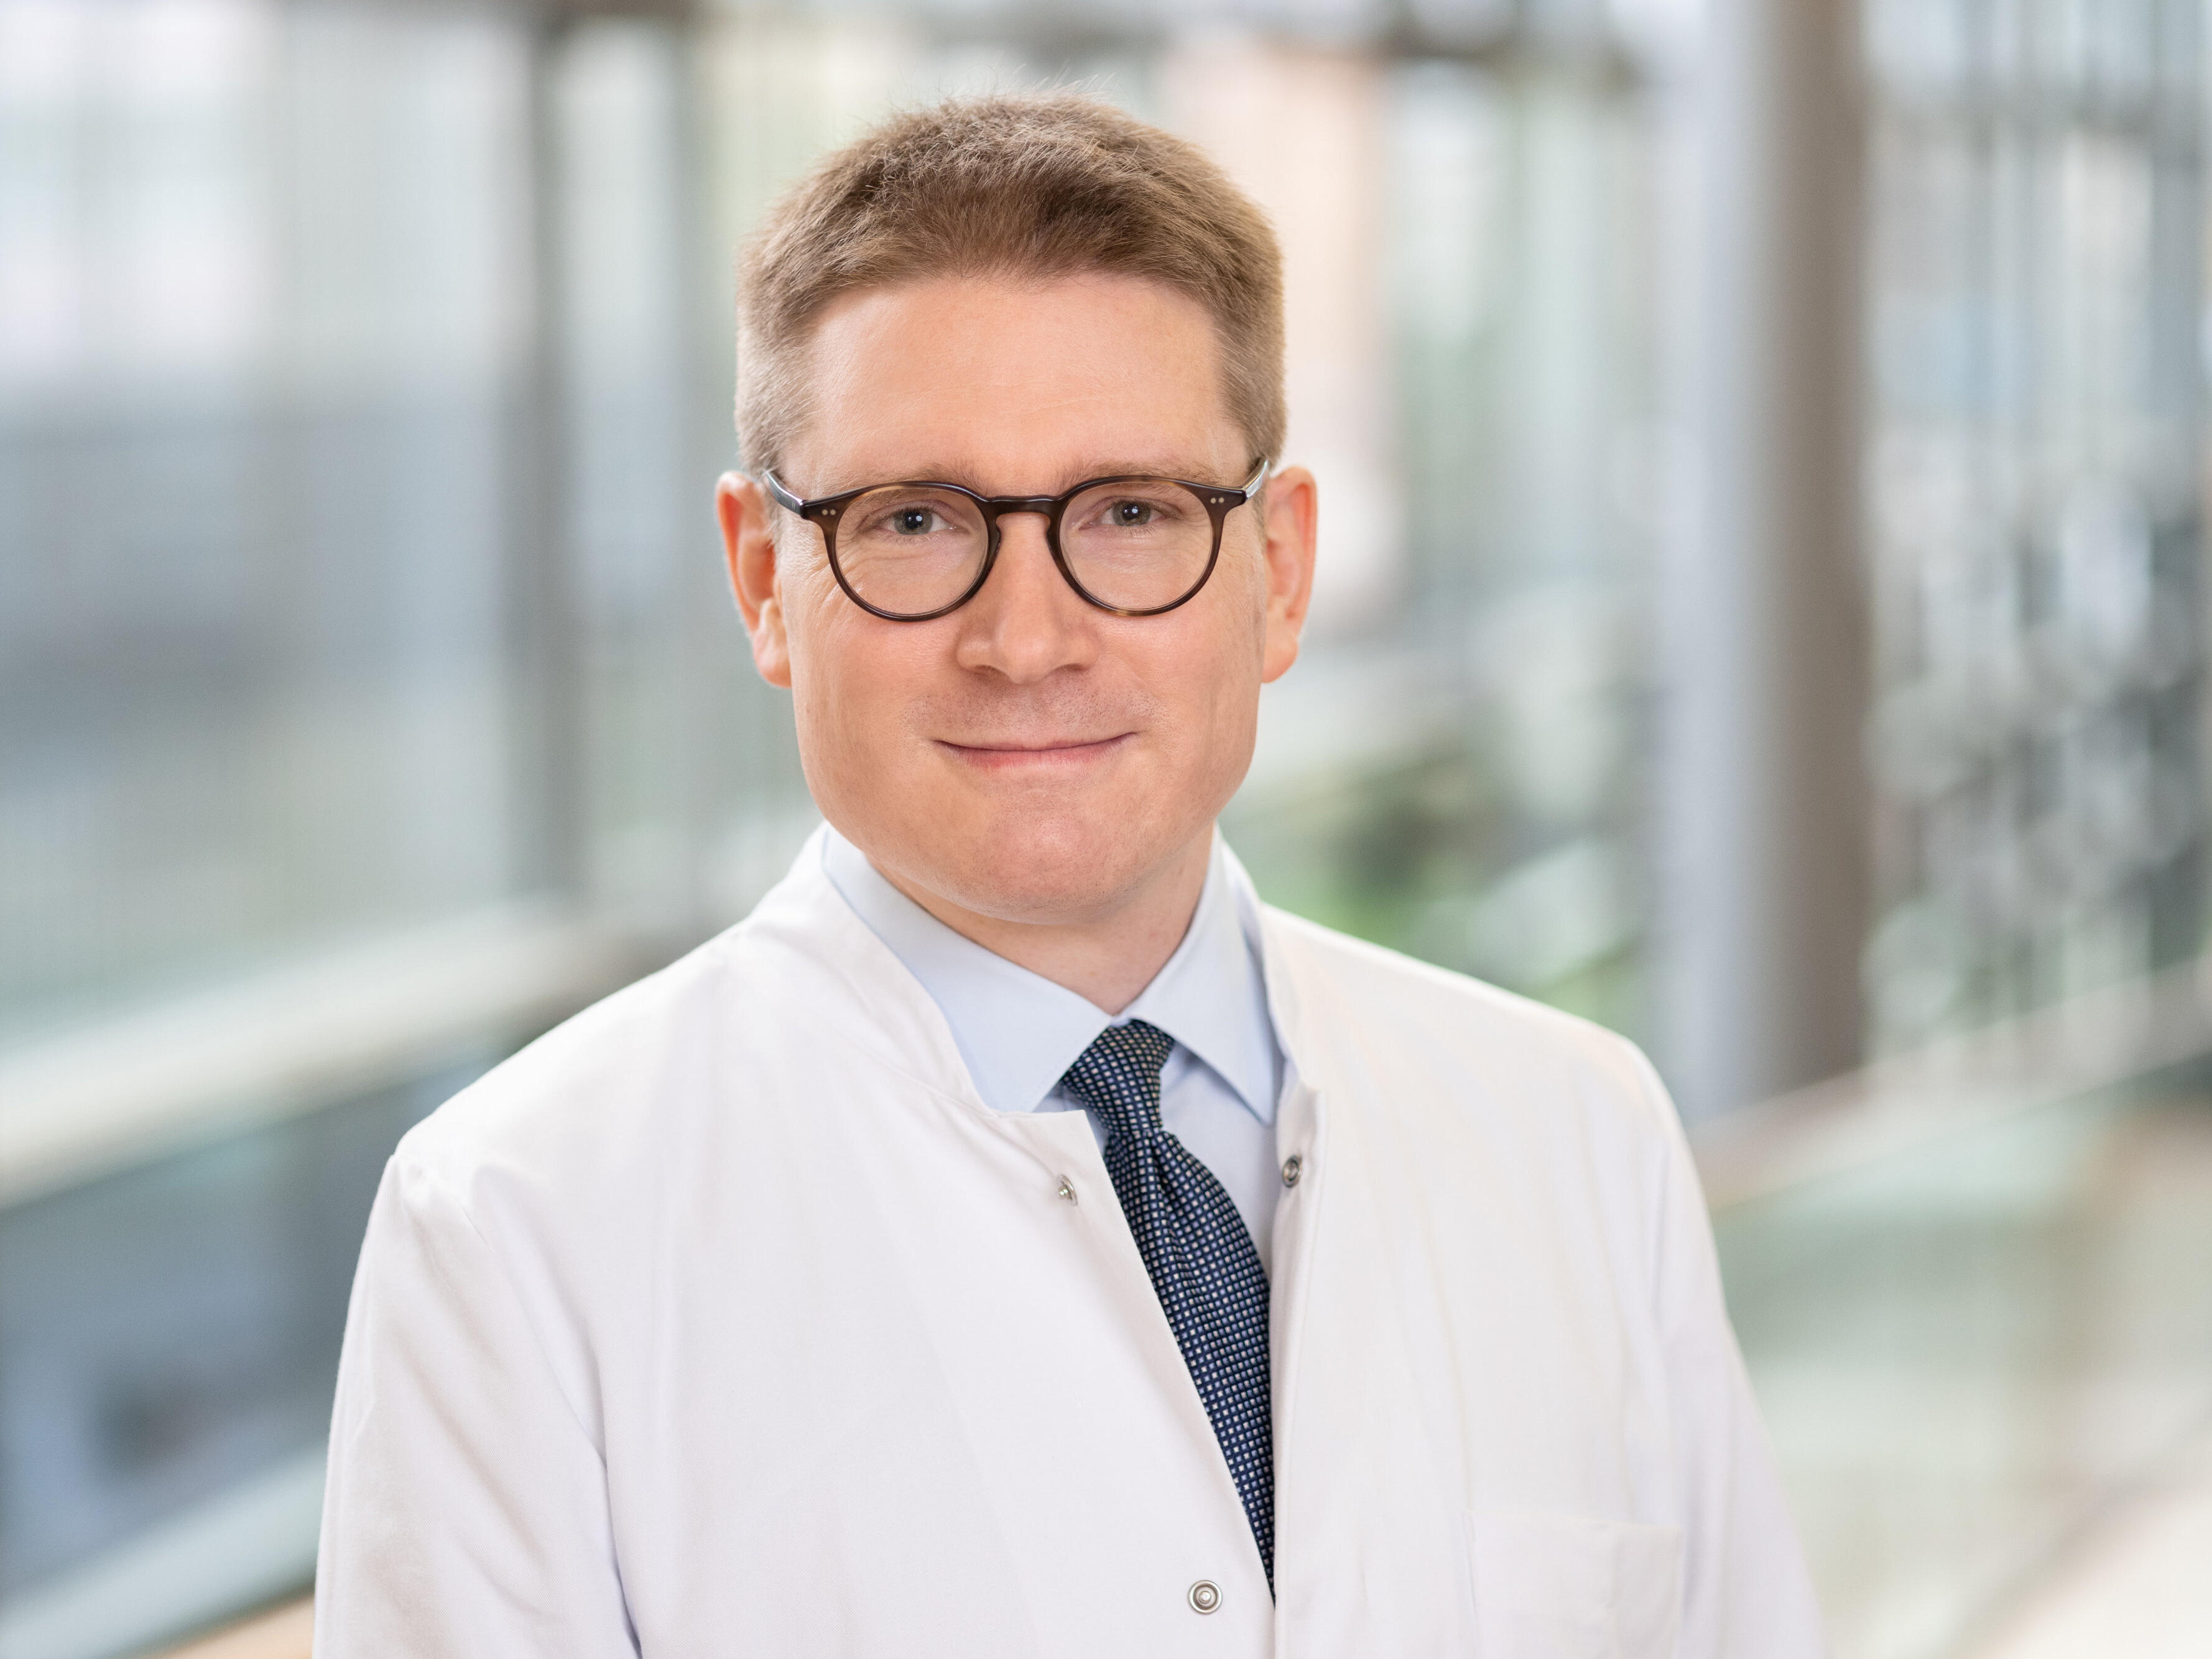 Univ.- Prof. Dr. med. David M. Leistner, Direktor der Klinik für Kardiologie/Angiologie